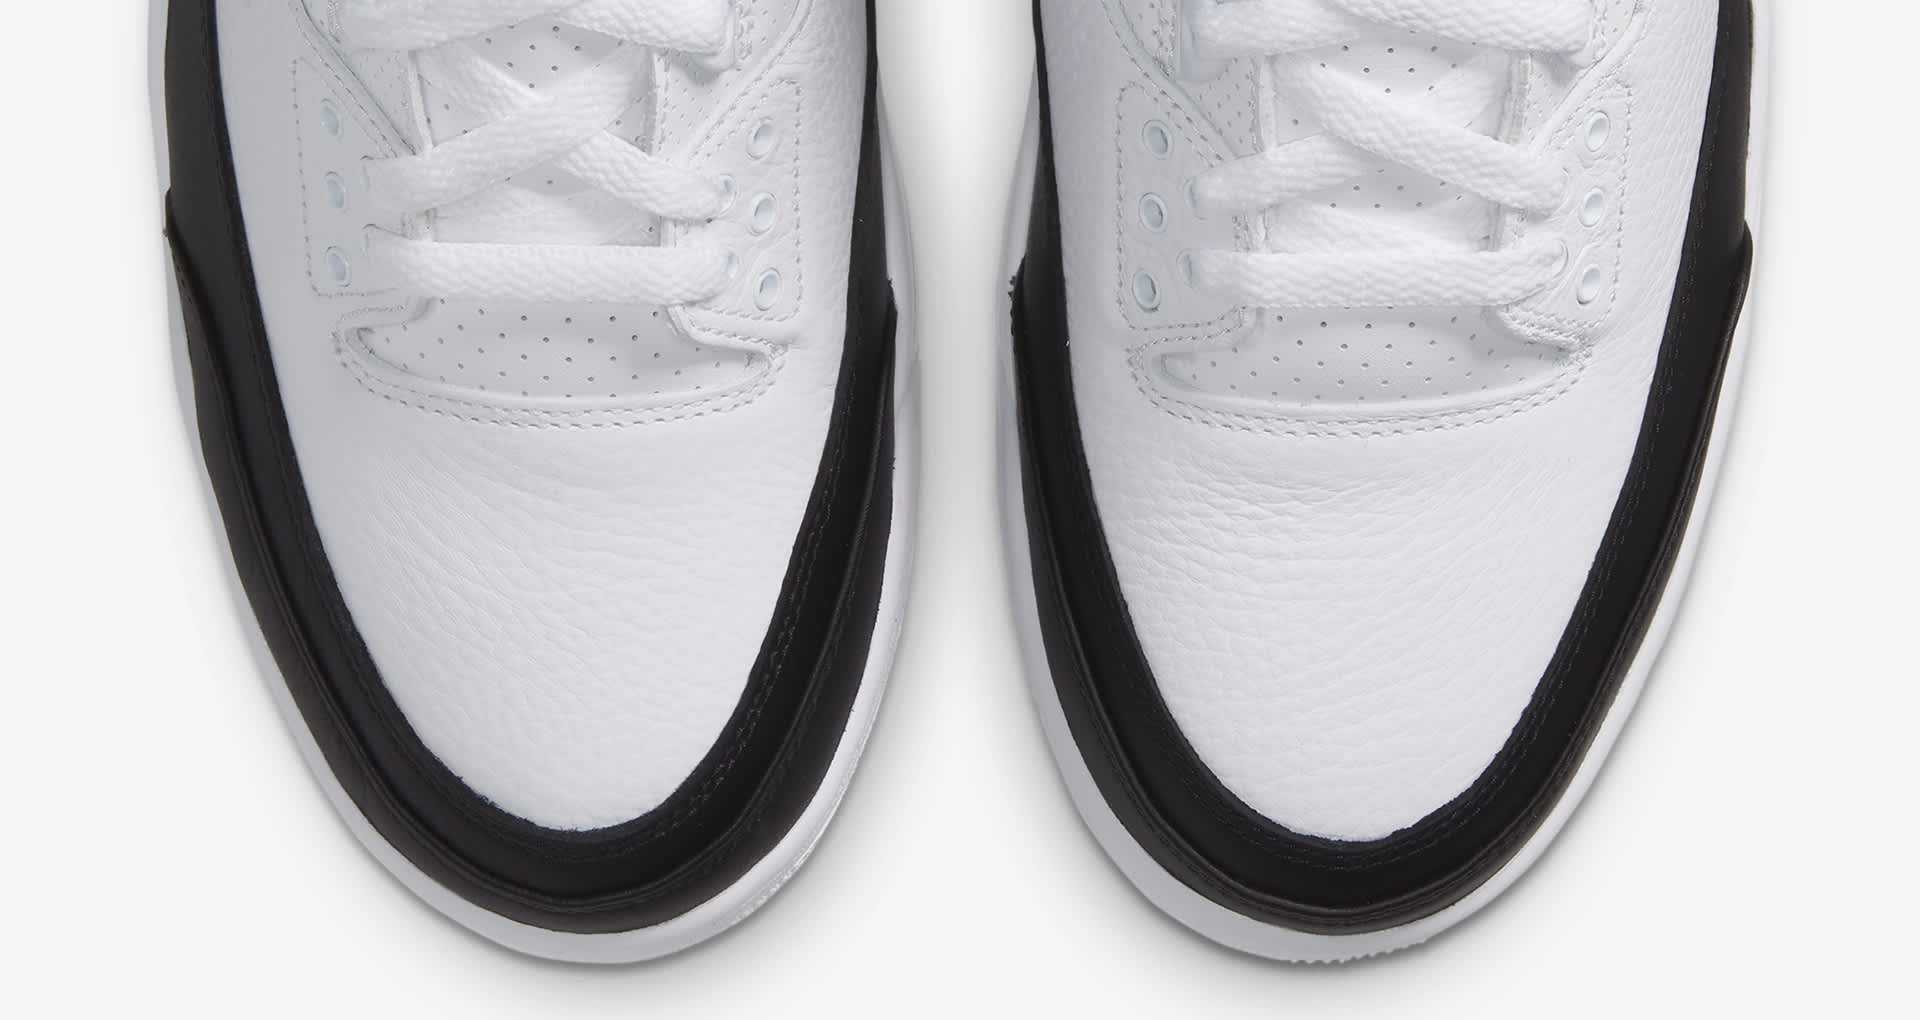 Air Jordan 3 x Fragment 'White' Release Date